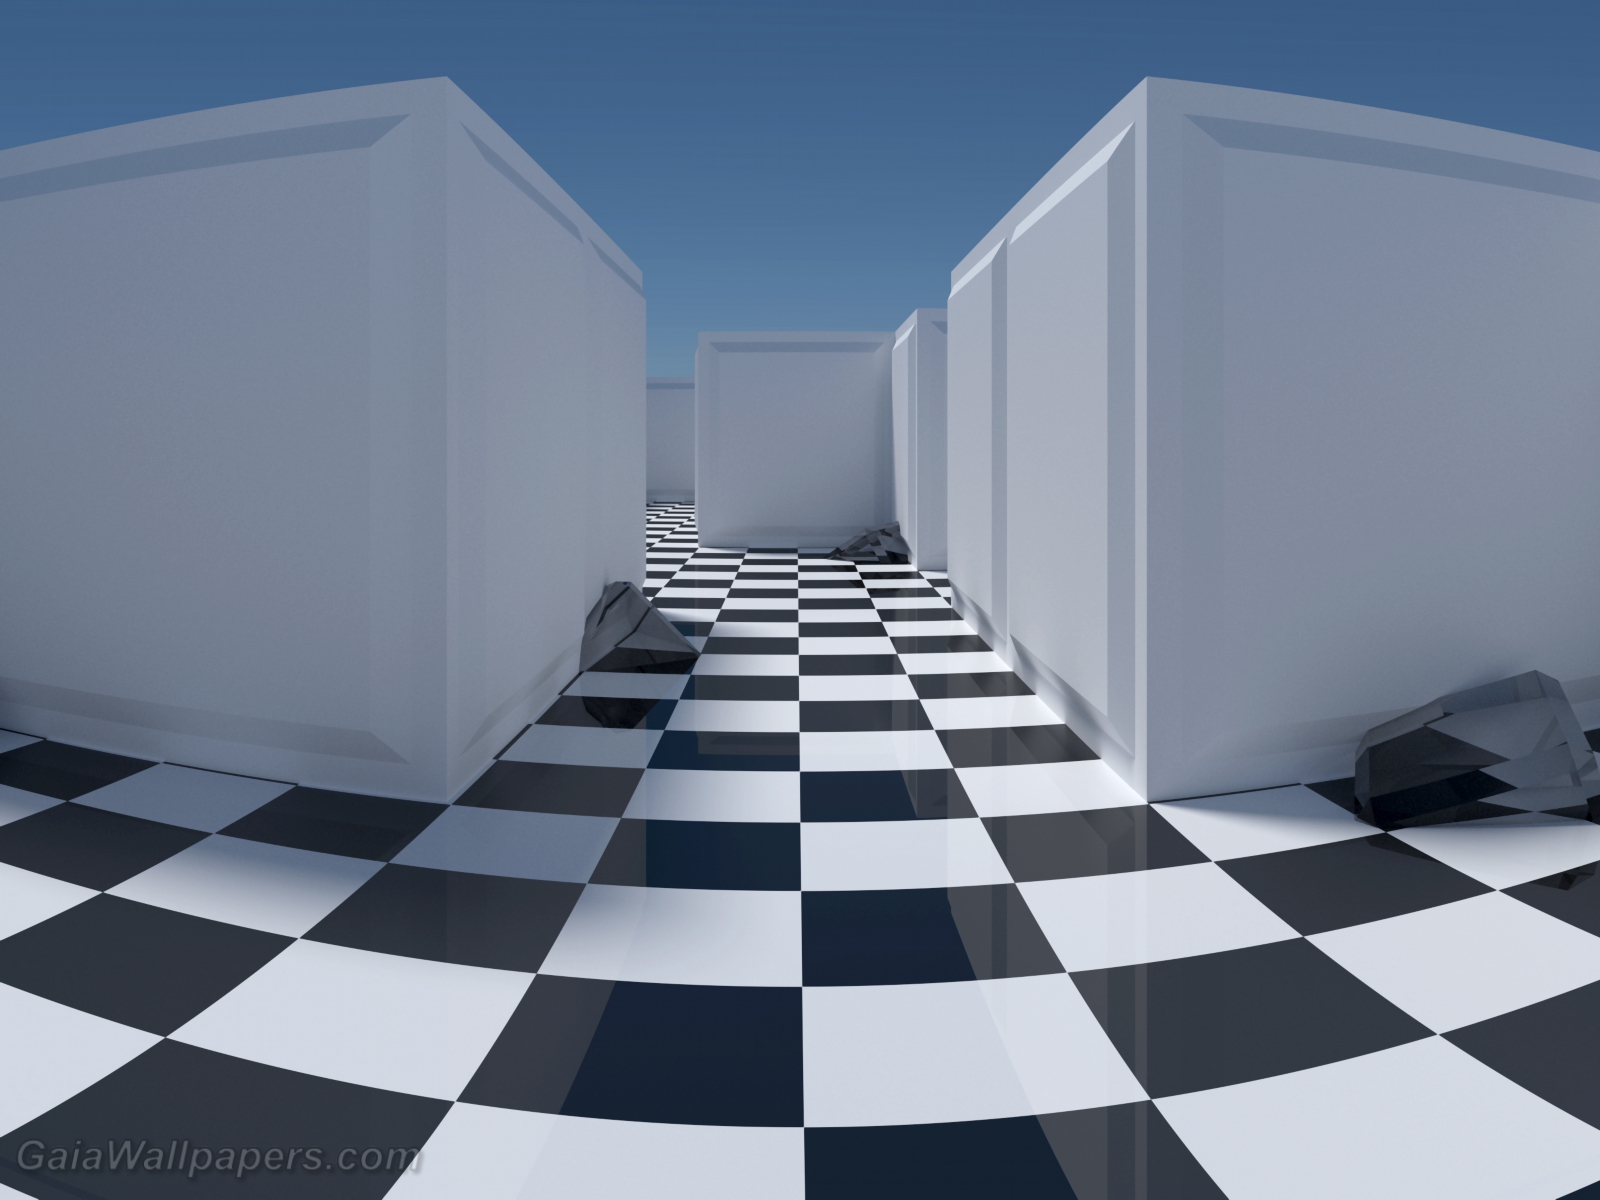 Checkerboard maze - Free desktop wallpapers